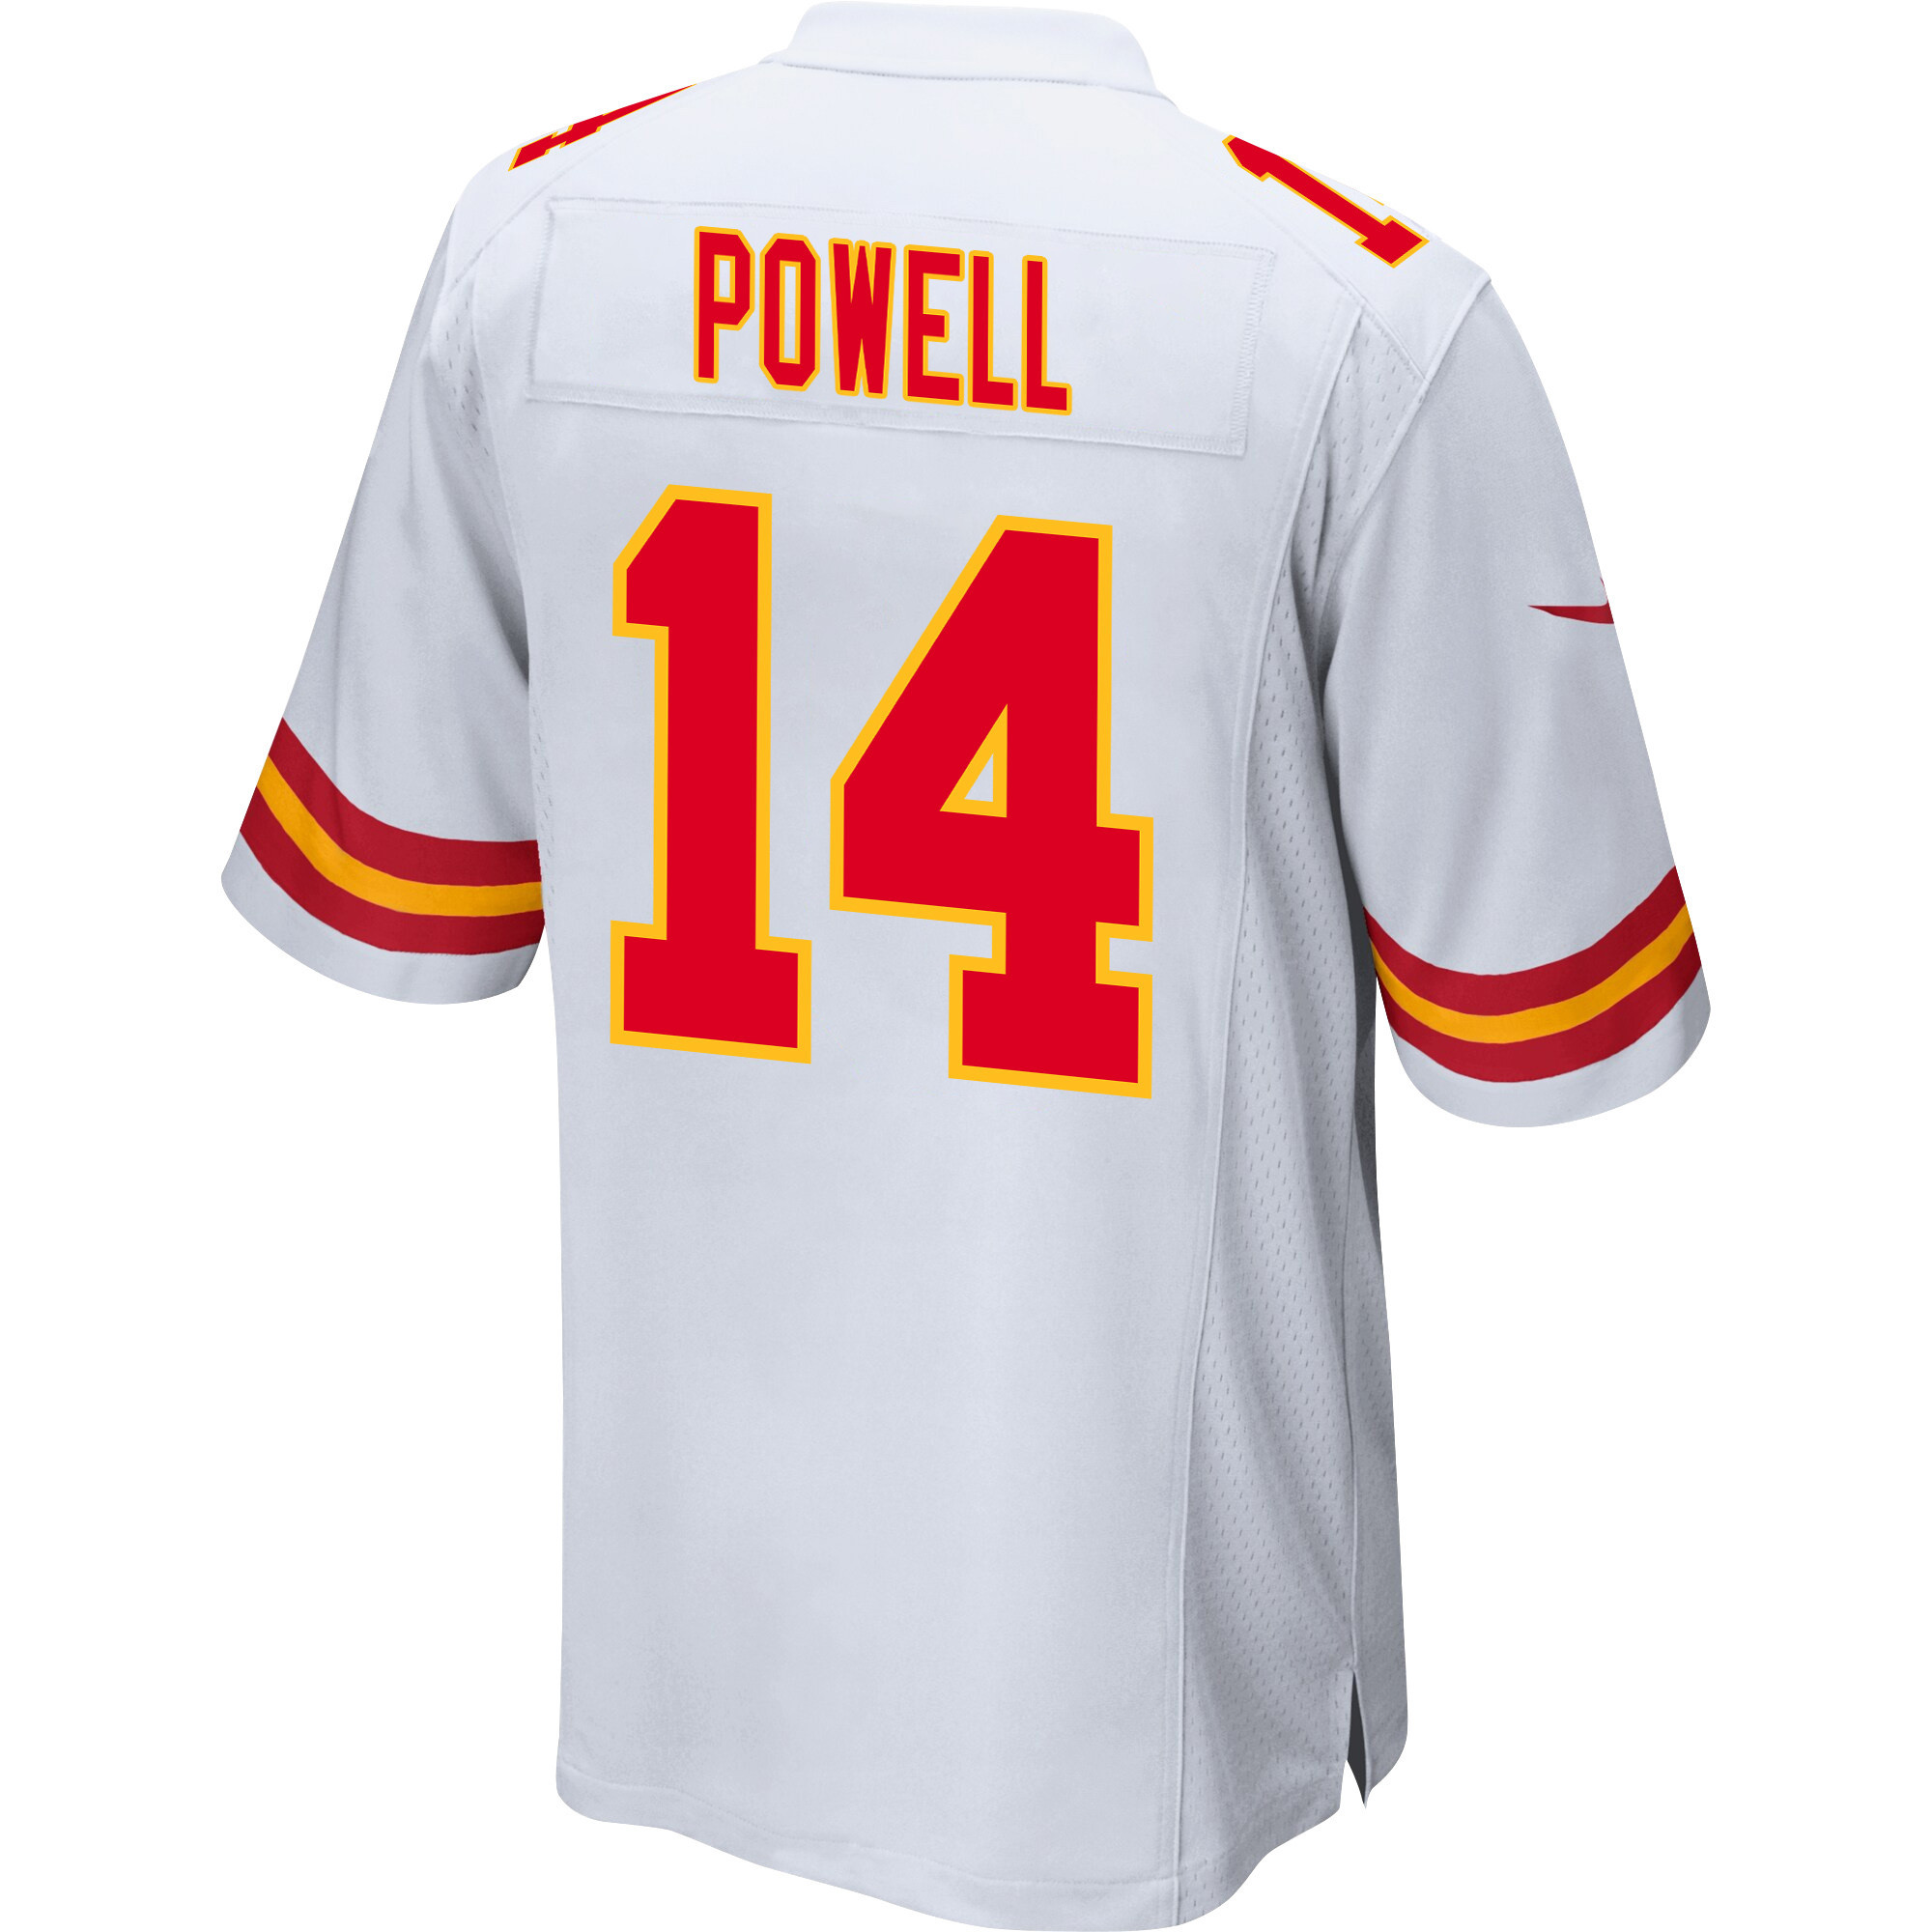 Cornell Powell 14 Kansas City Chiefs Super Bowl LVIII Champions 4X Game Men Jersey - White